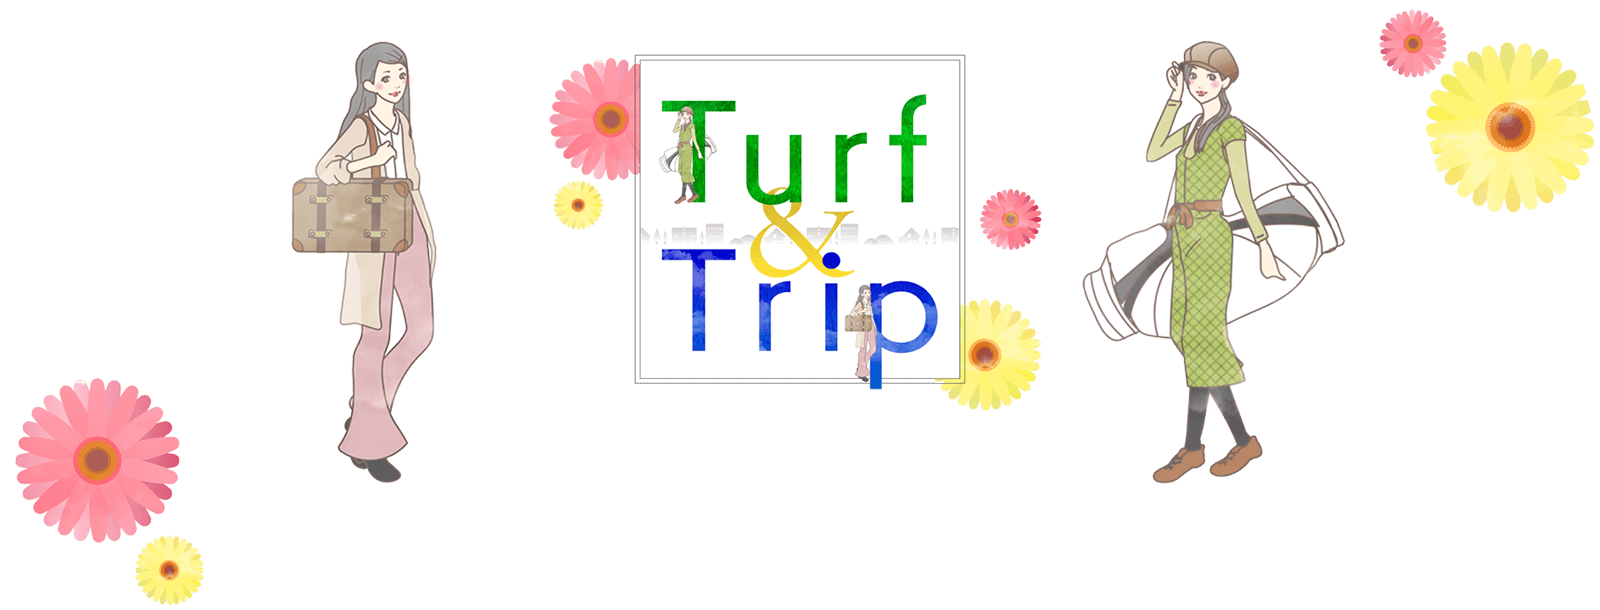 Turf&Trip